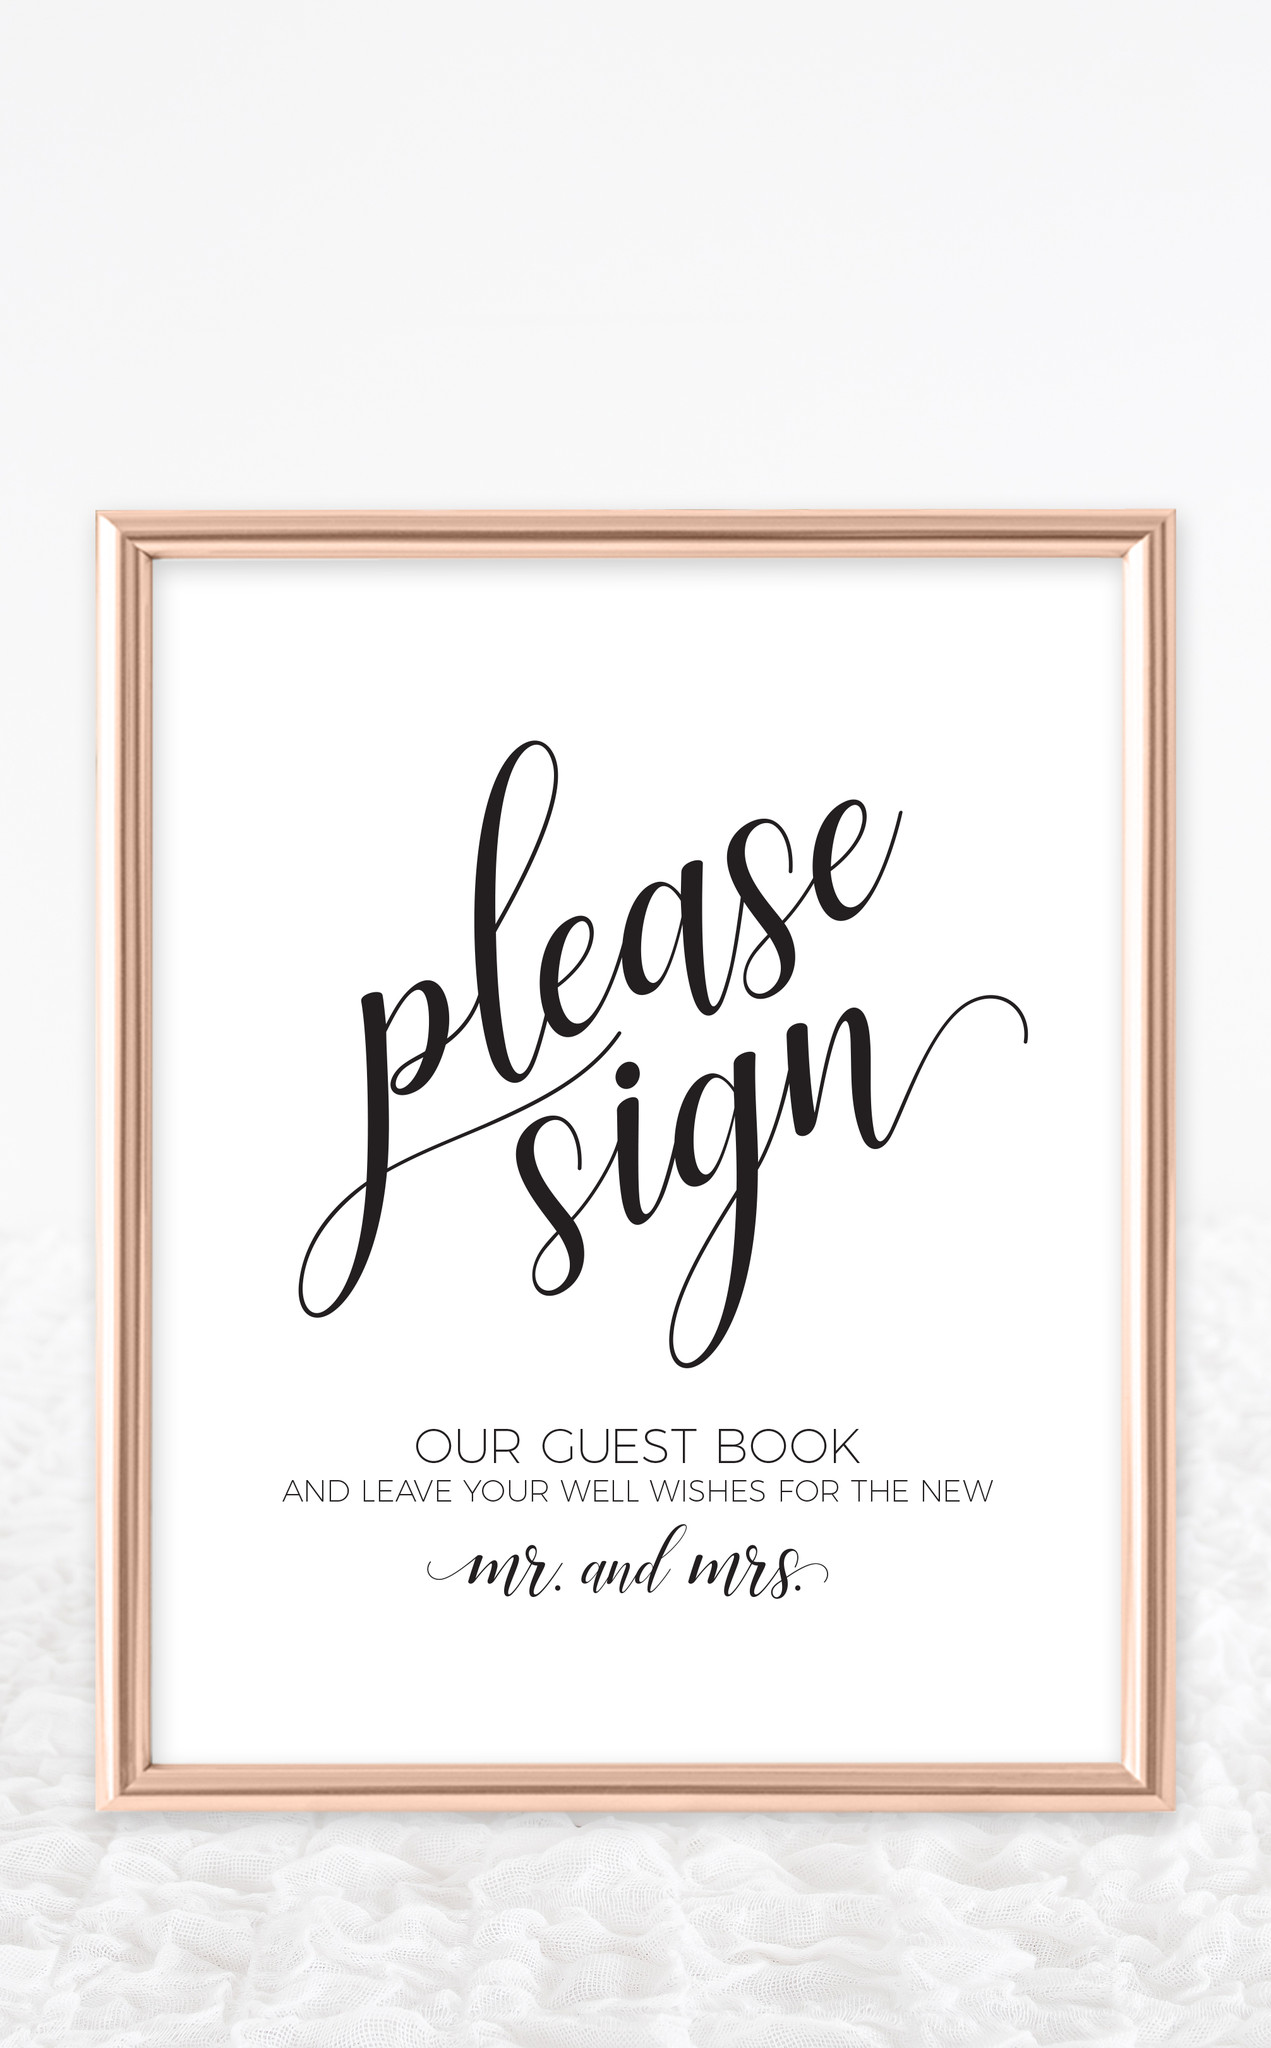 Signing Guest Book Wedding
 Printable Wedding Guest Book Sign – ARRA Creative